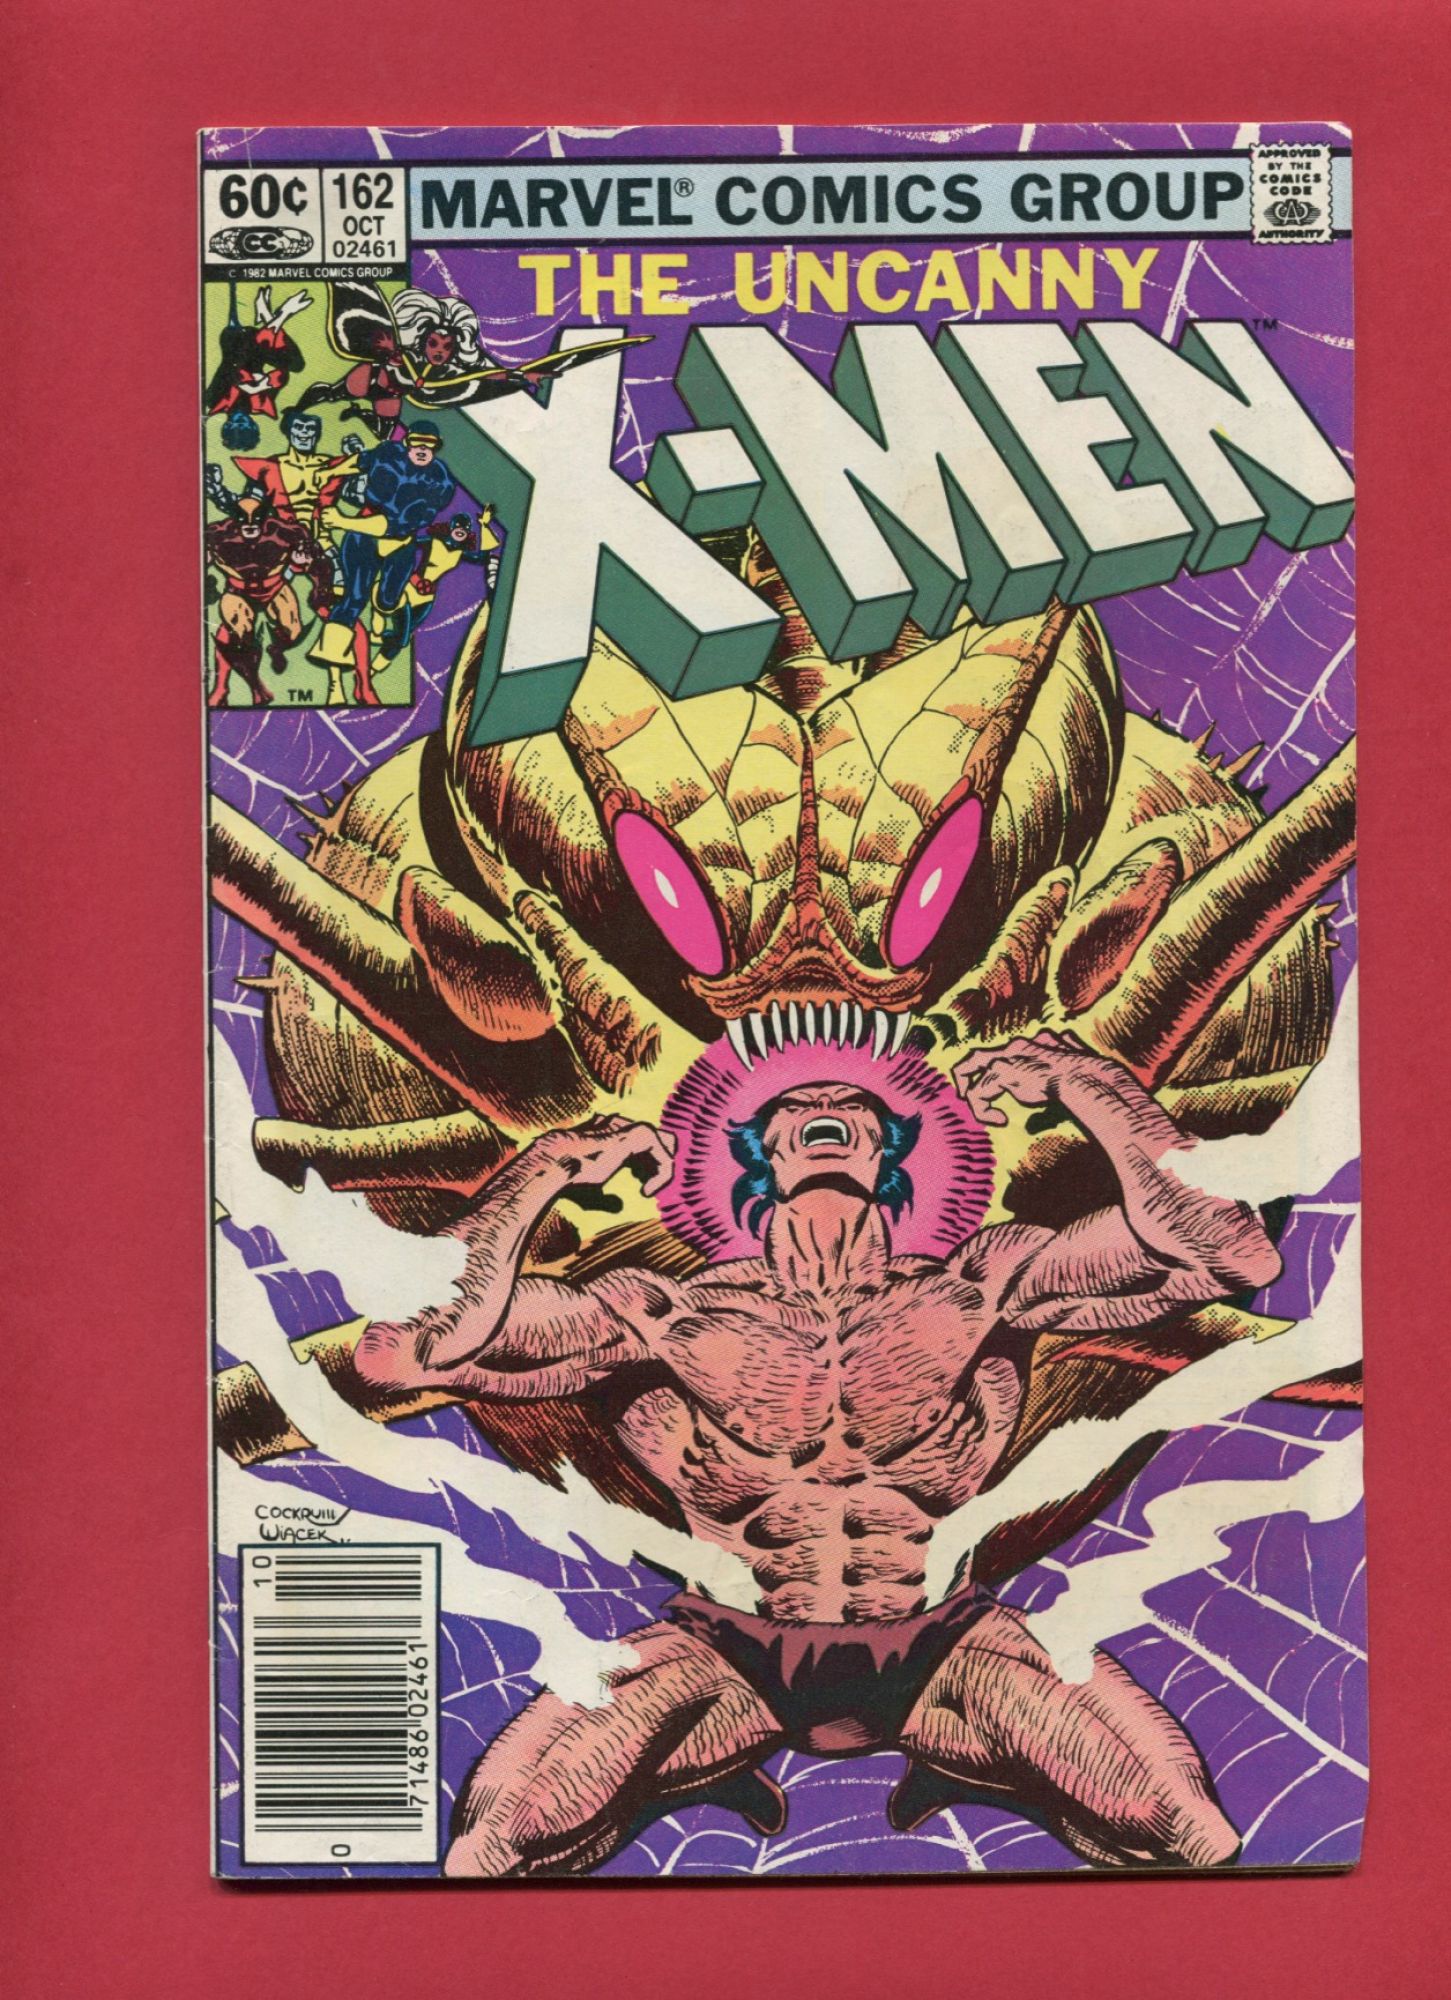 Uncanny X-Men #162, Oct 1982, 3.0 GD/VG